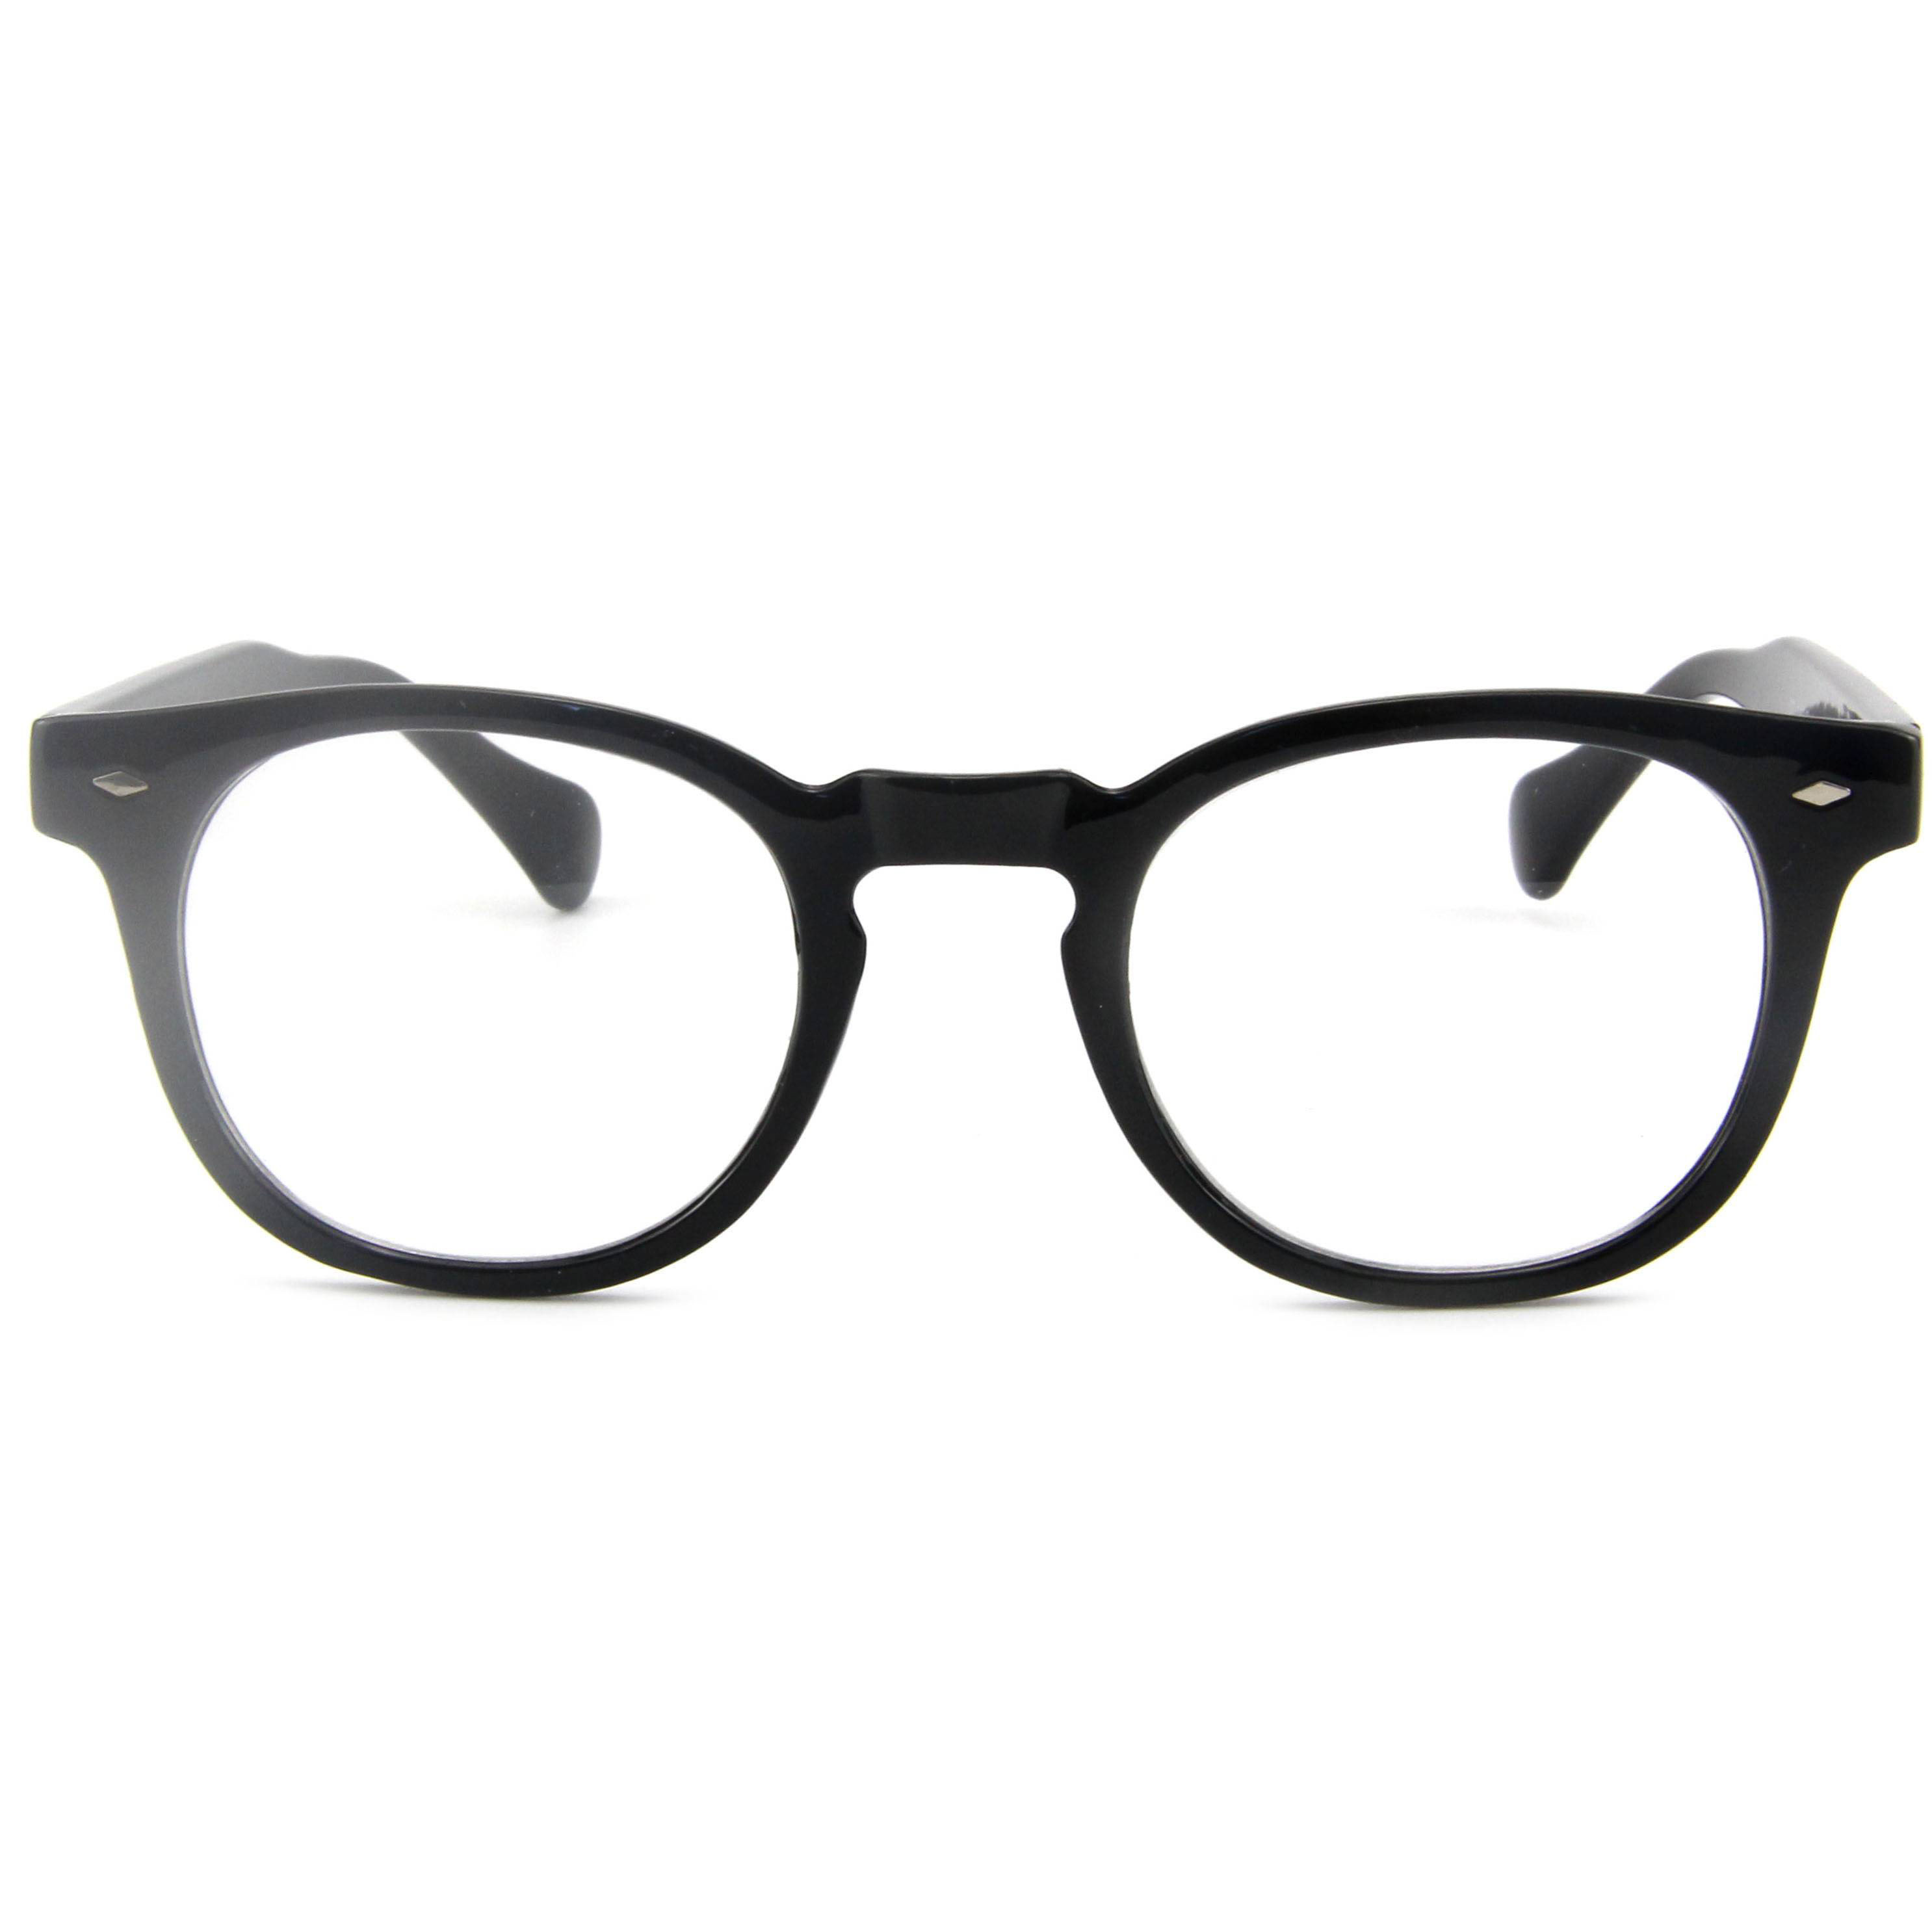 fashion optical glasses vendor For optical frame glasses-1